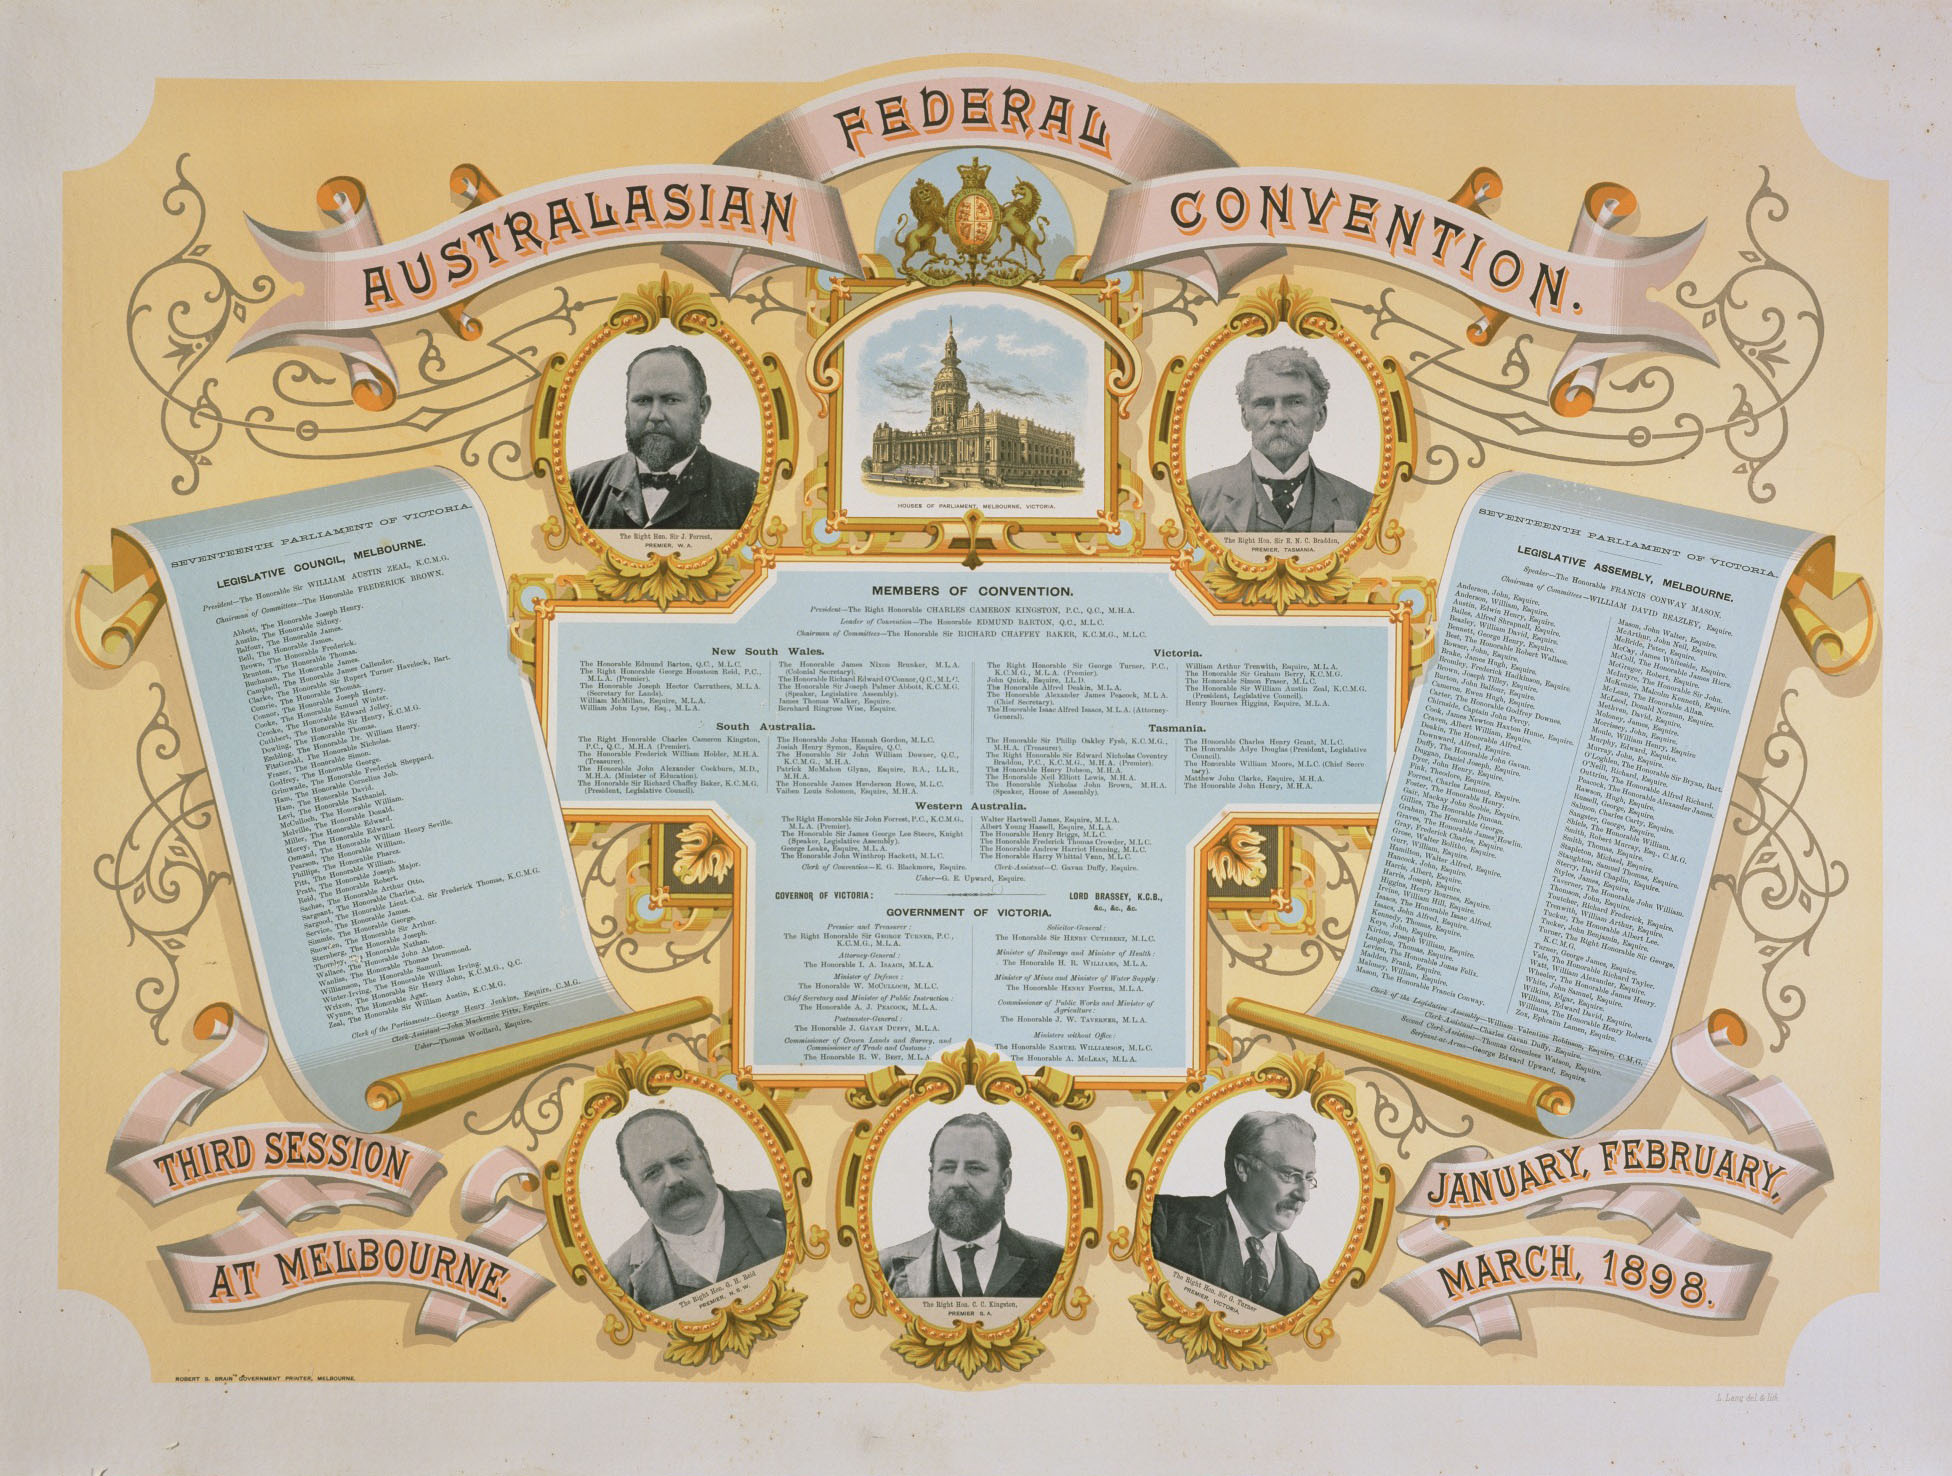 Australasian Federal Convention souvenir poster, 1898.